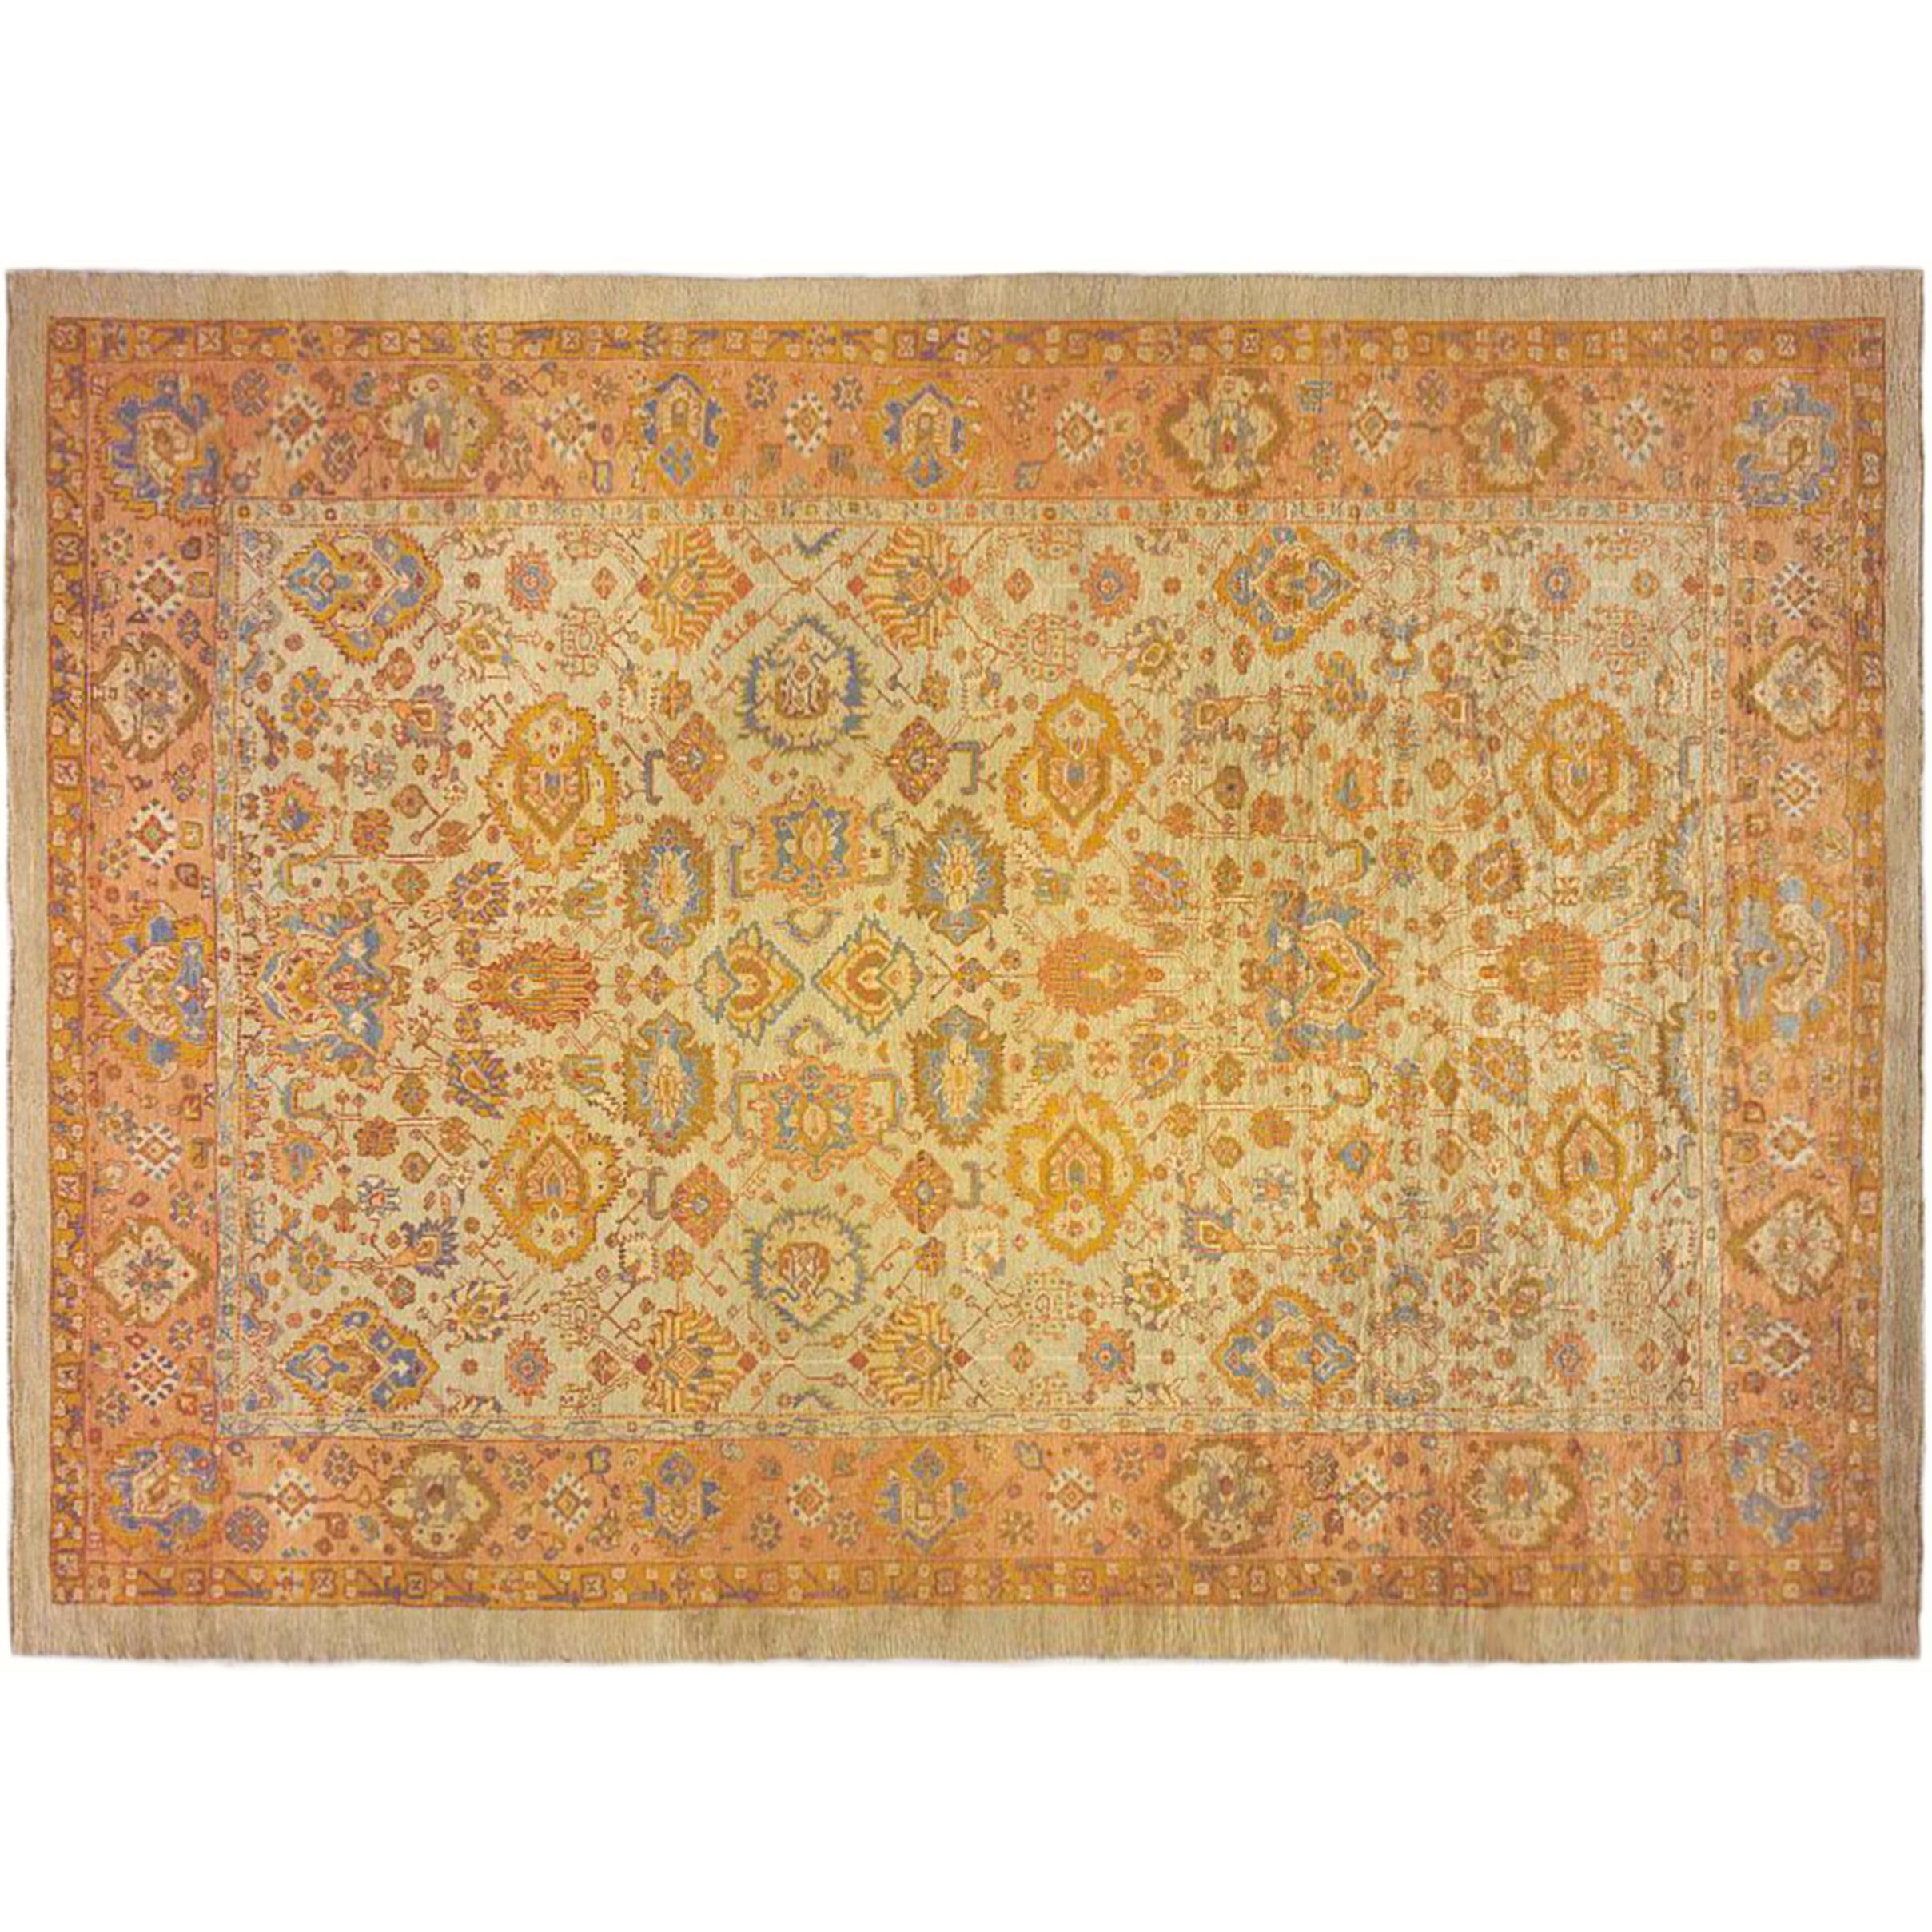 Antique Turkish Oushak Oriental Carpet, in Mansion Size, w/ Large Allover Design